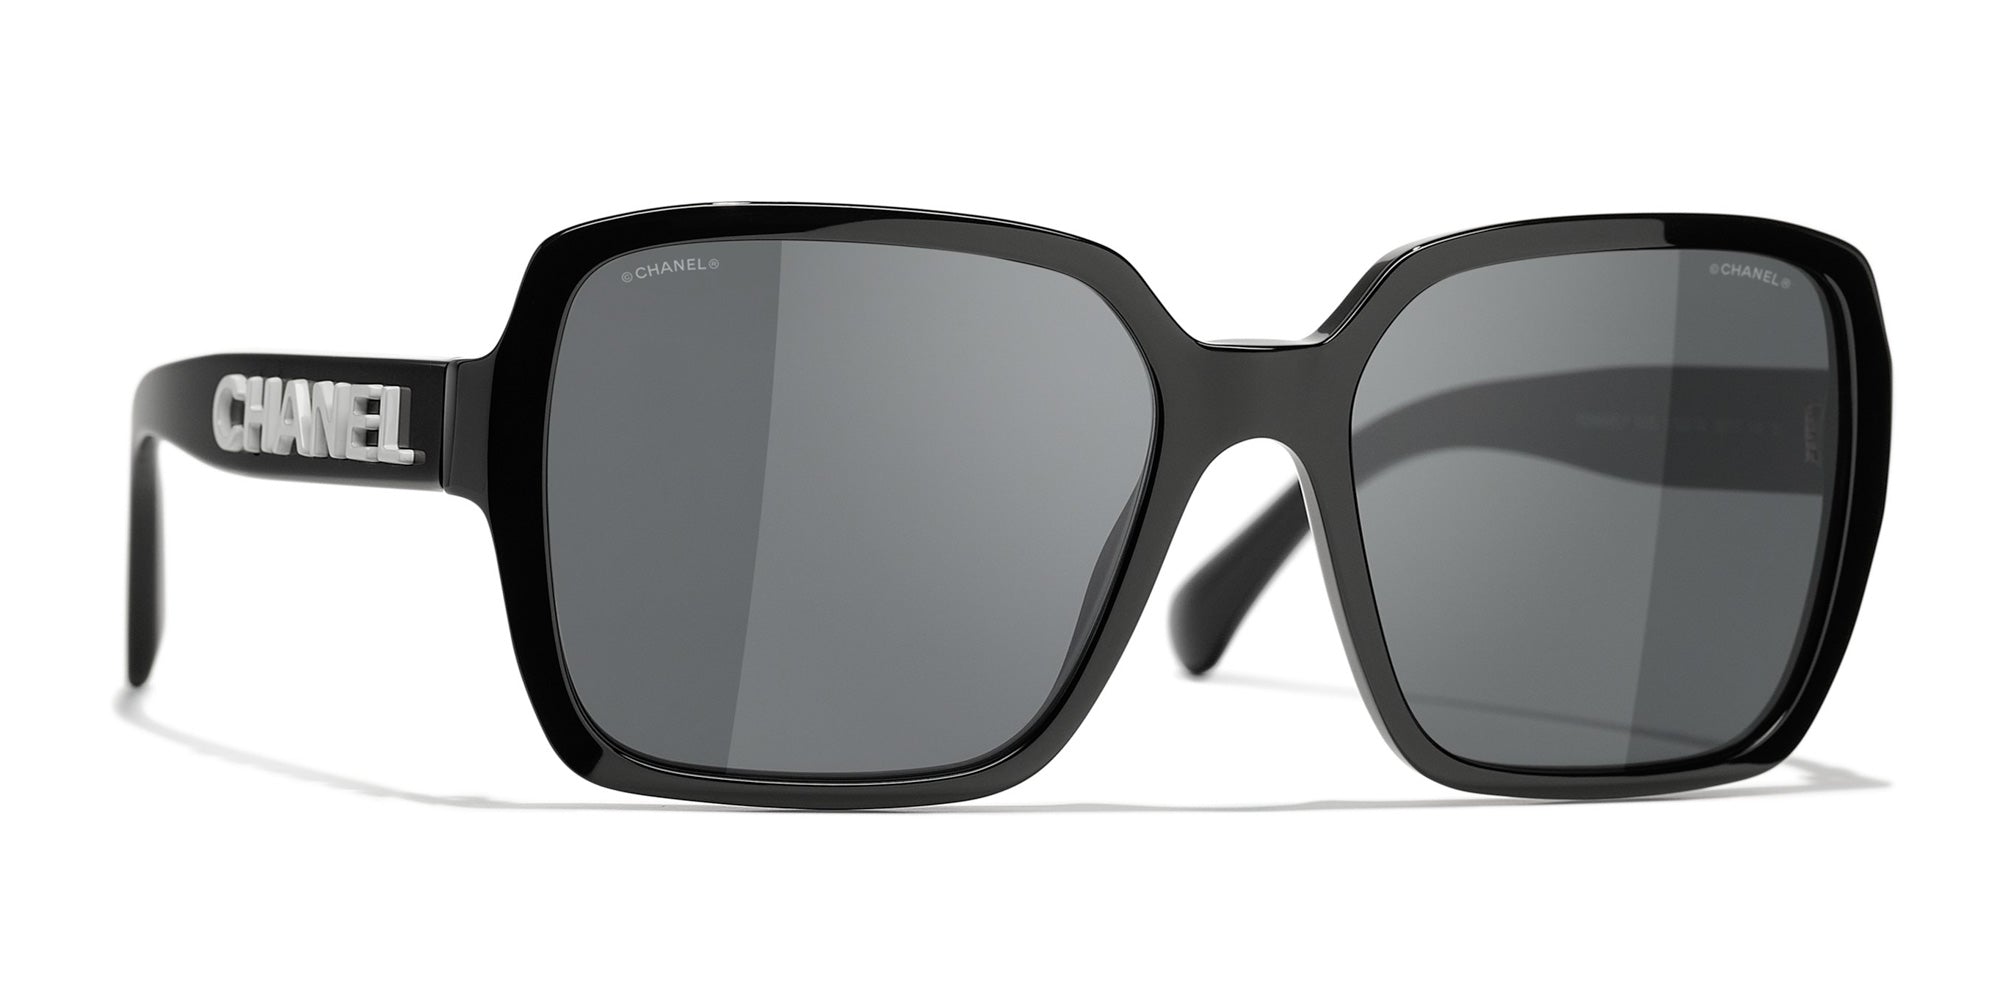 Chanel 5408 Black/Grey Sunglasses